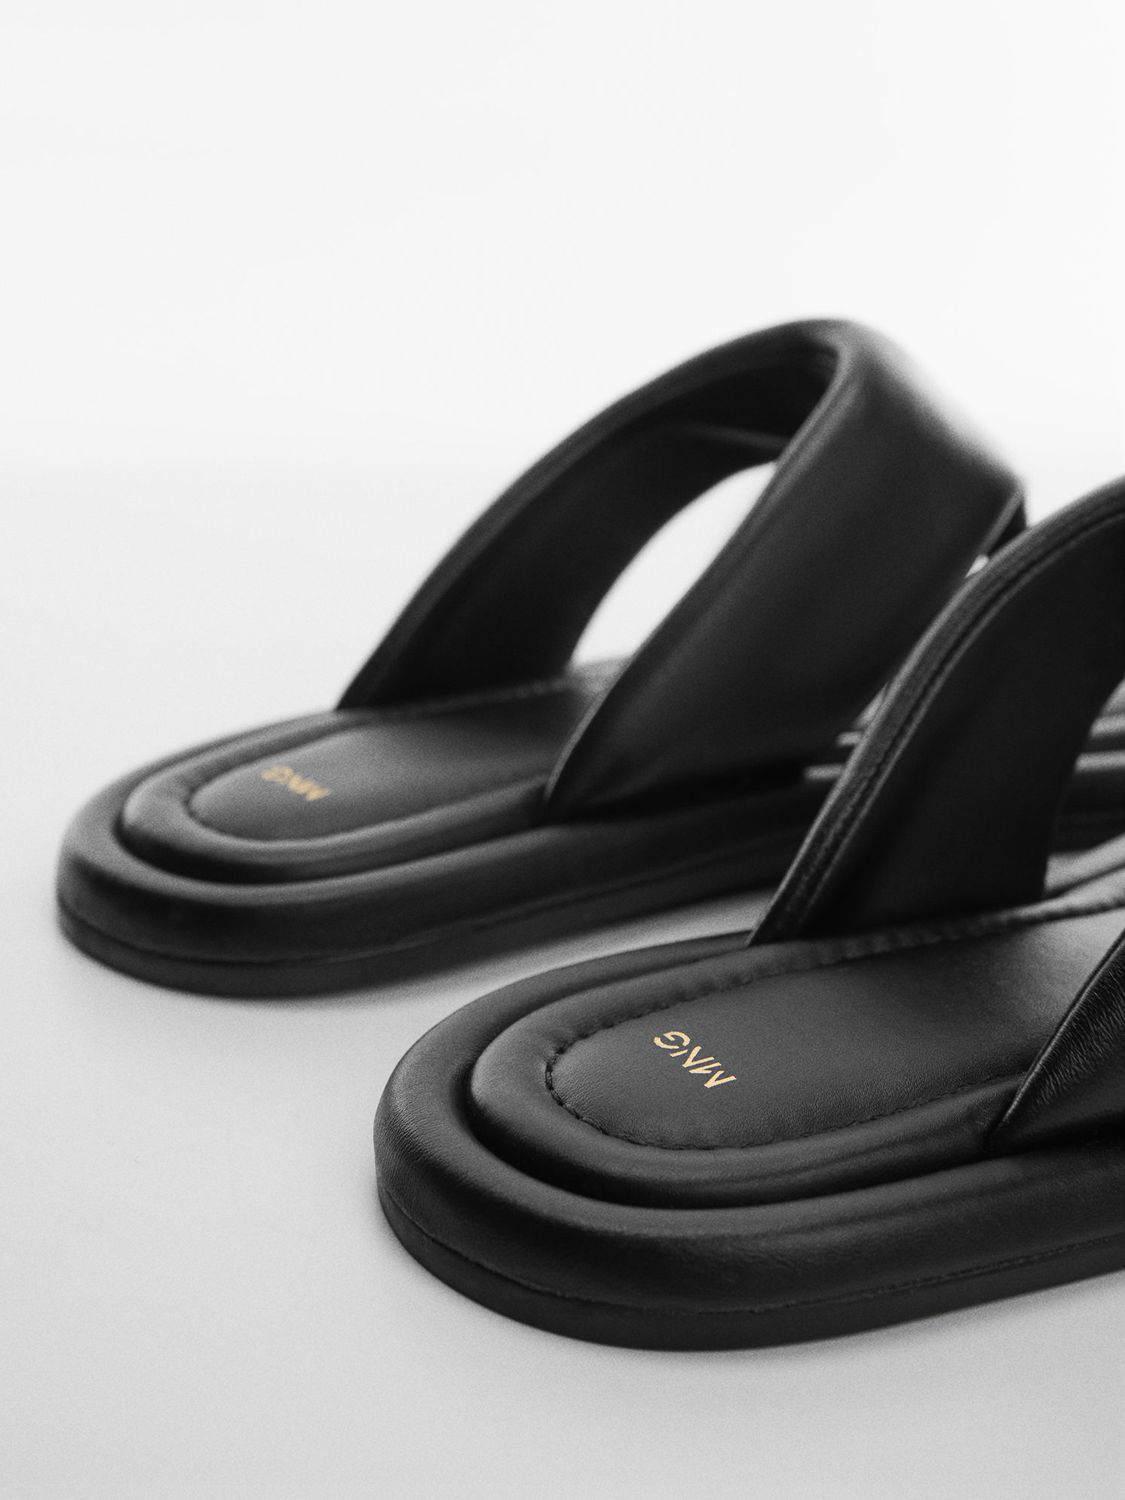 Mango Sam Leather Footbed Sandals, Black at John Lewis & Partners